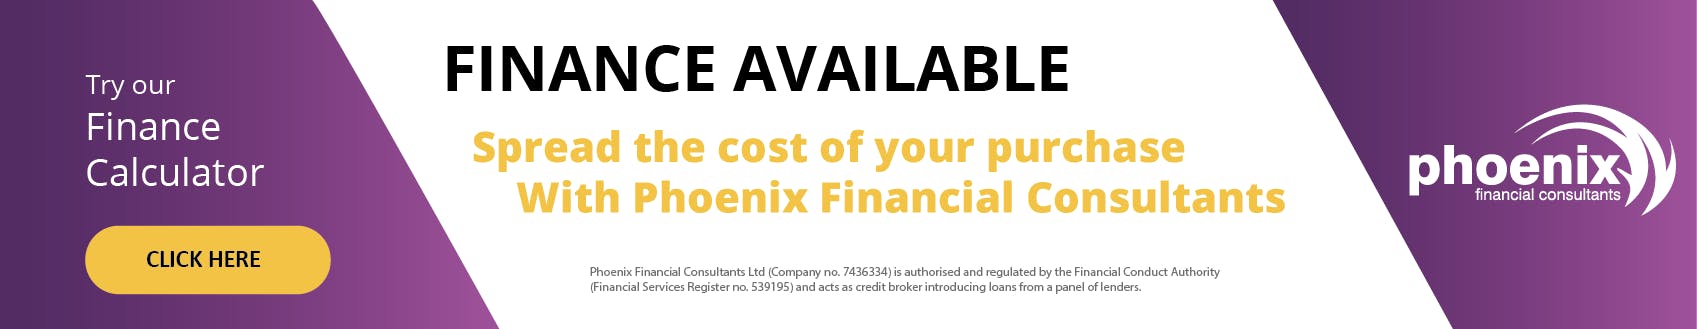 Phoenix finance